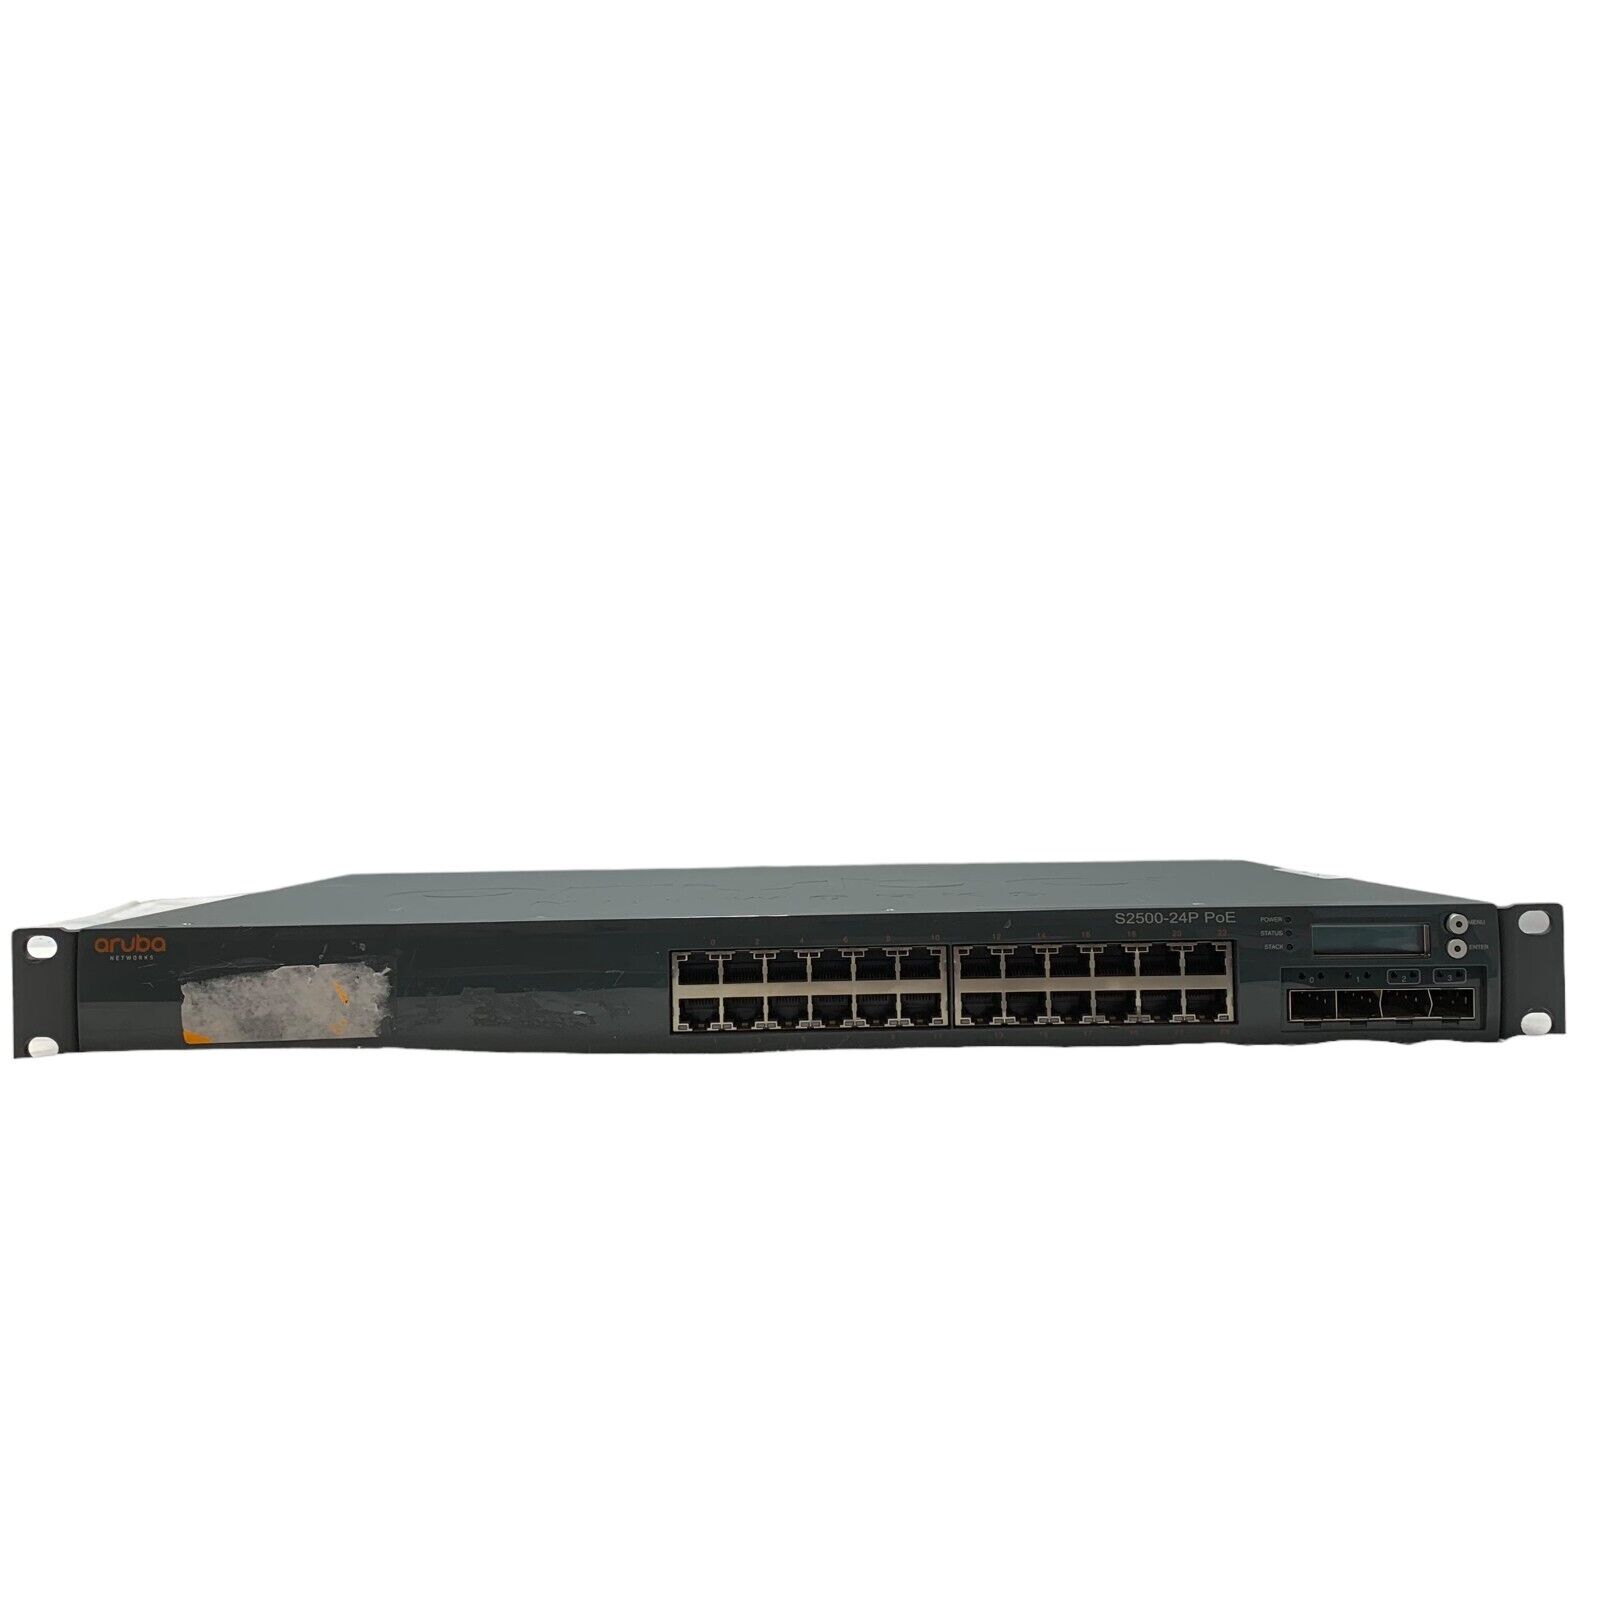 Aruba Networks S2500-24P PoE Gigabit Ethernet Switch SKU 8261